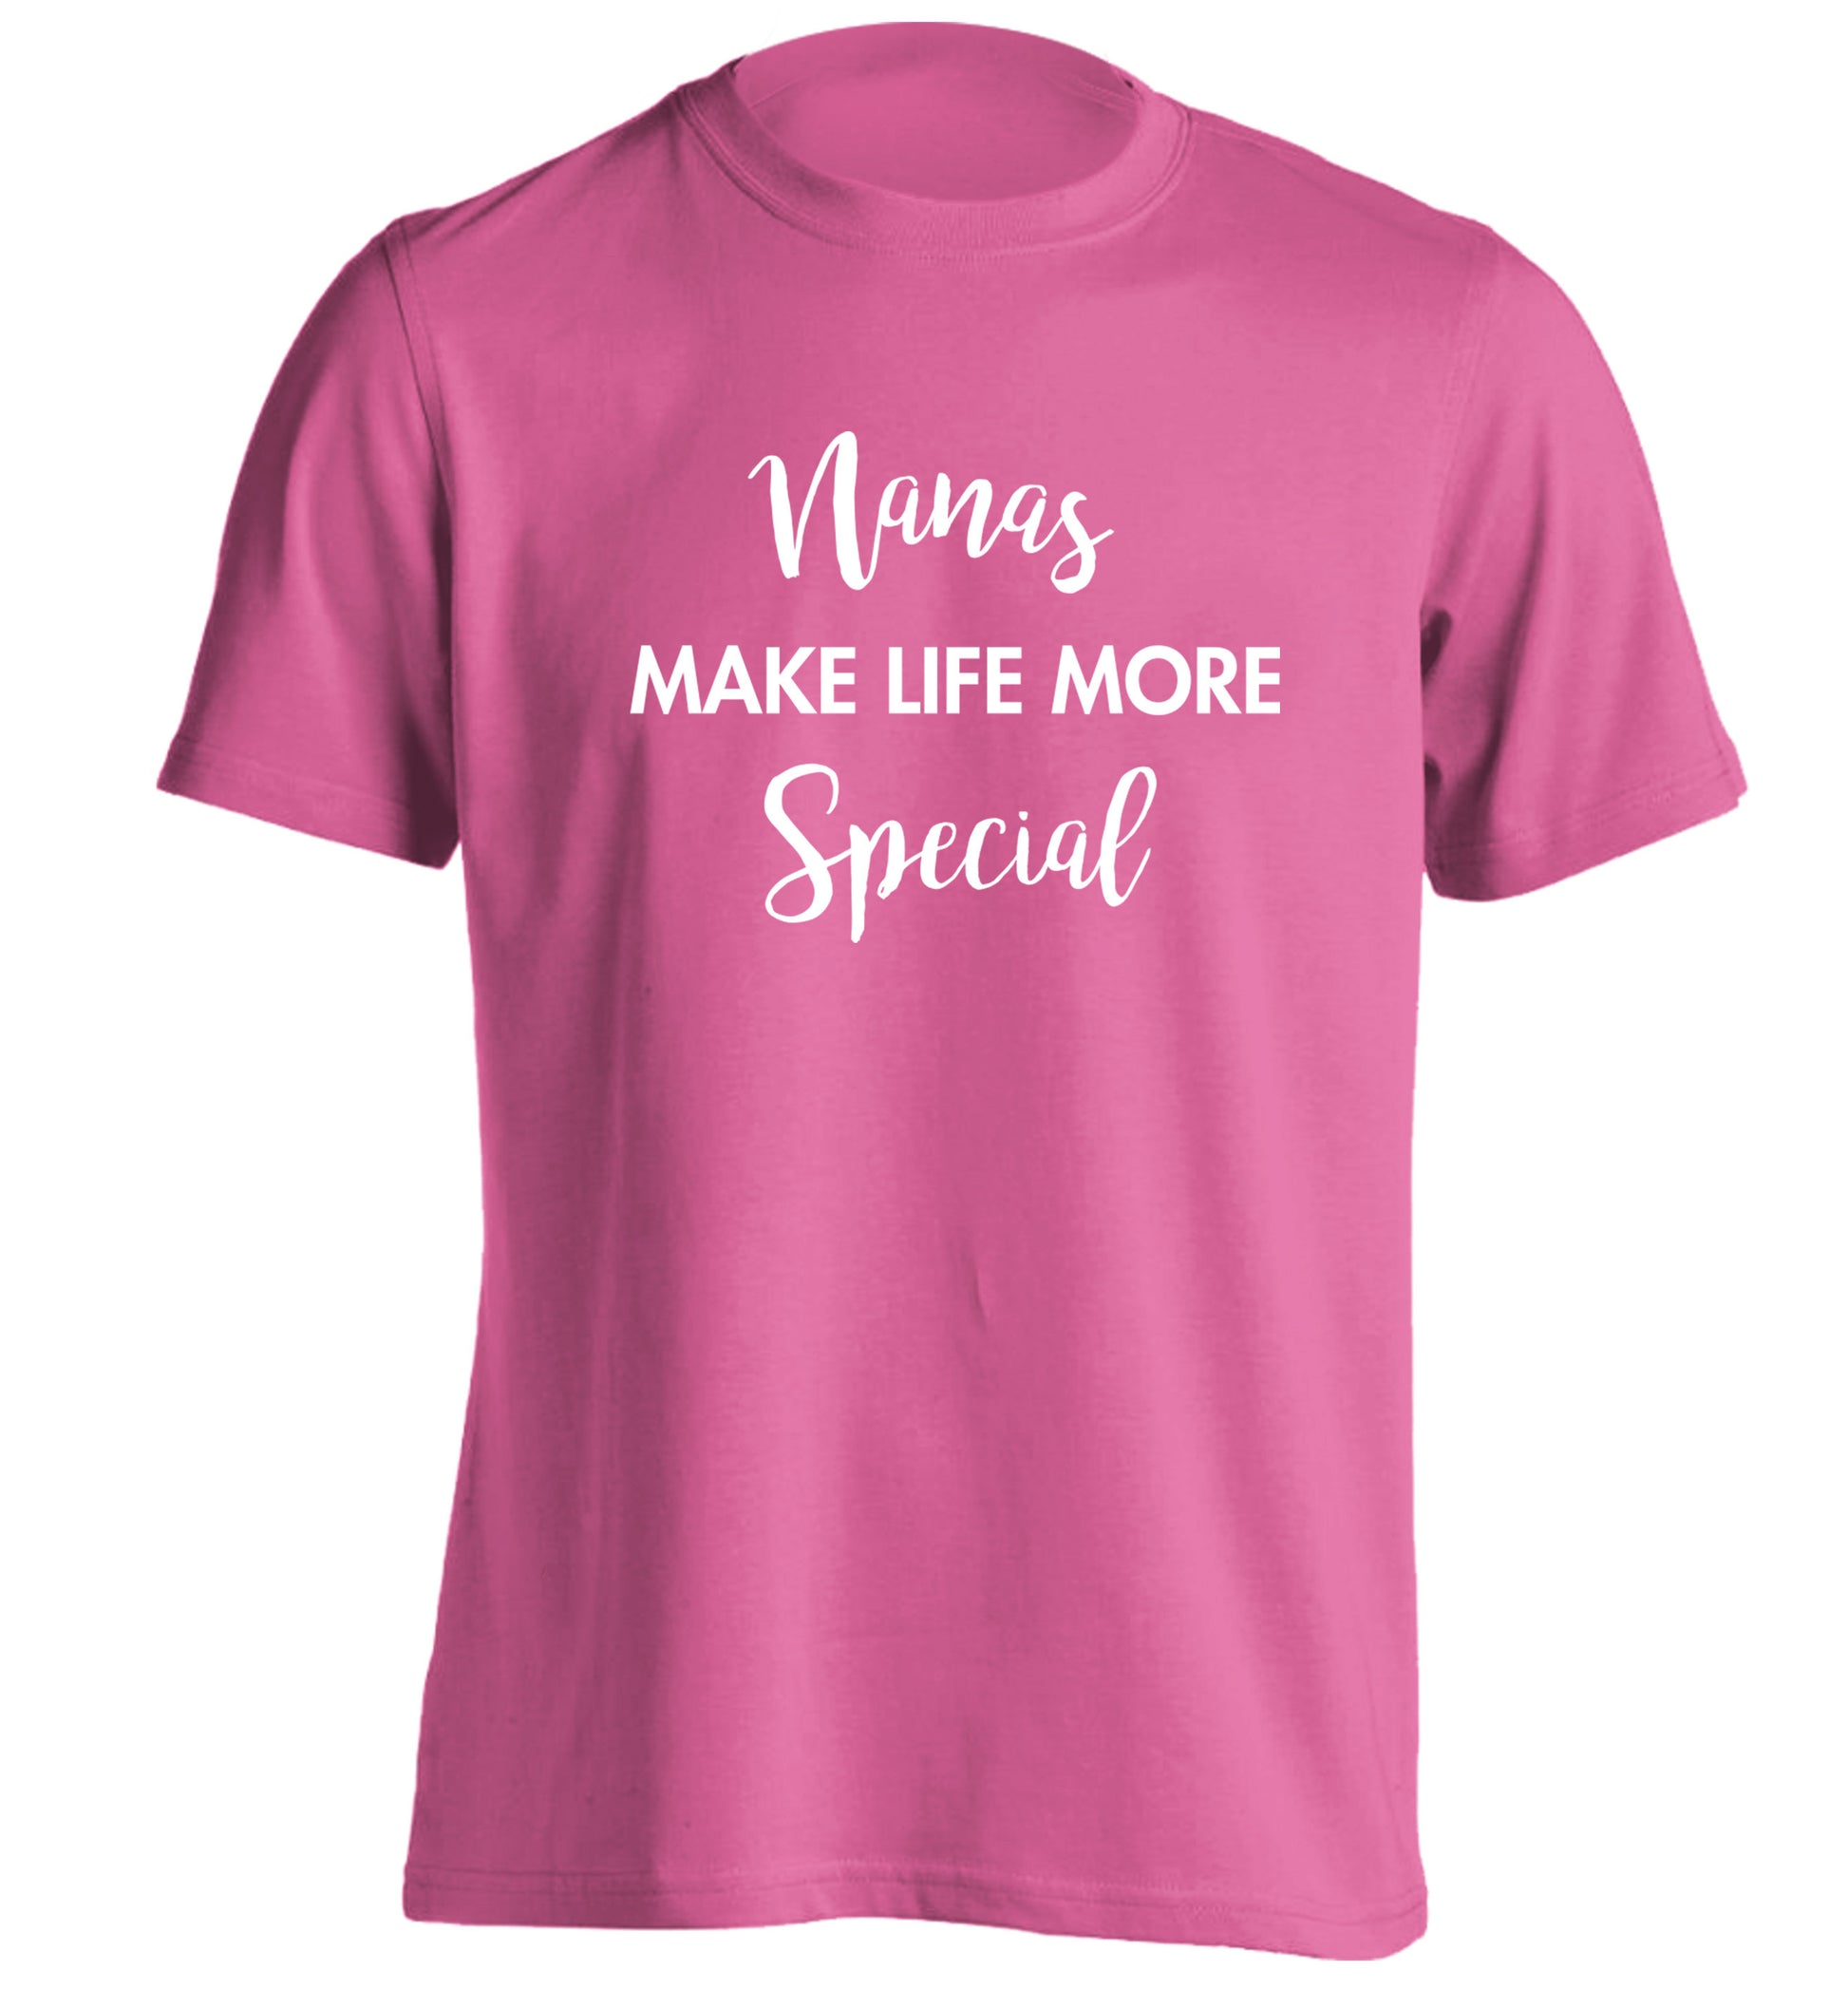 Nanas make life more special adults unisex pink Tshirt 2XL